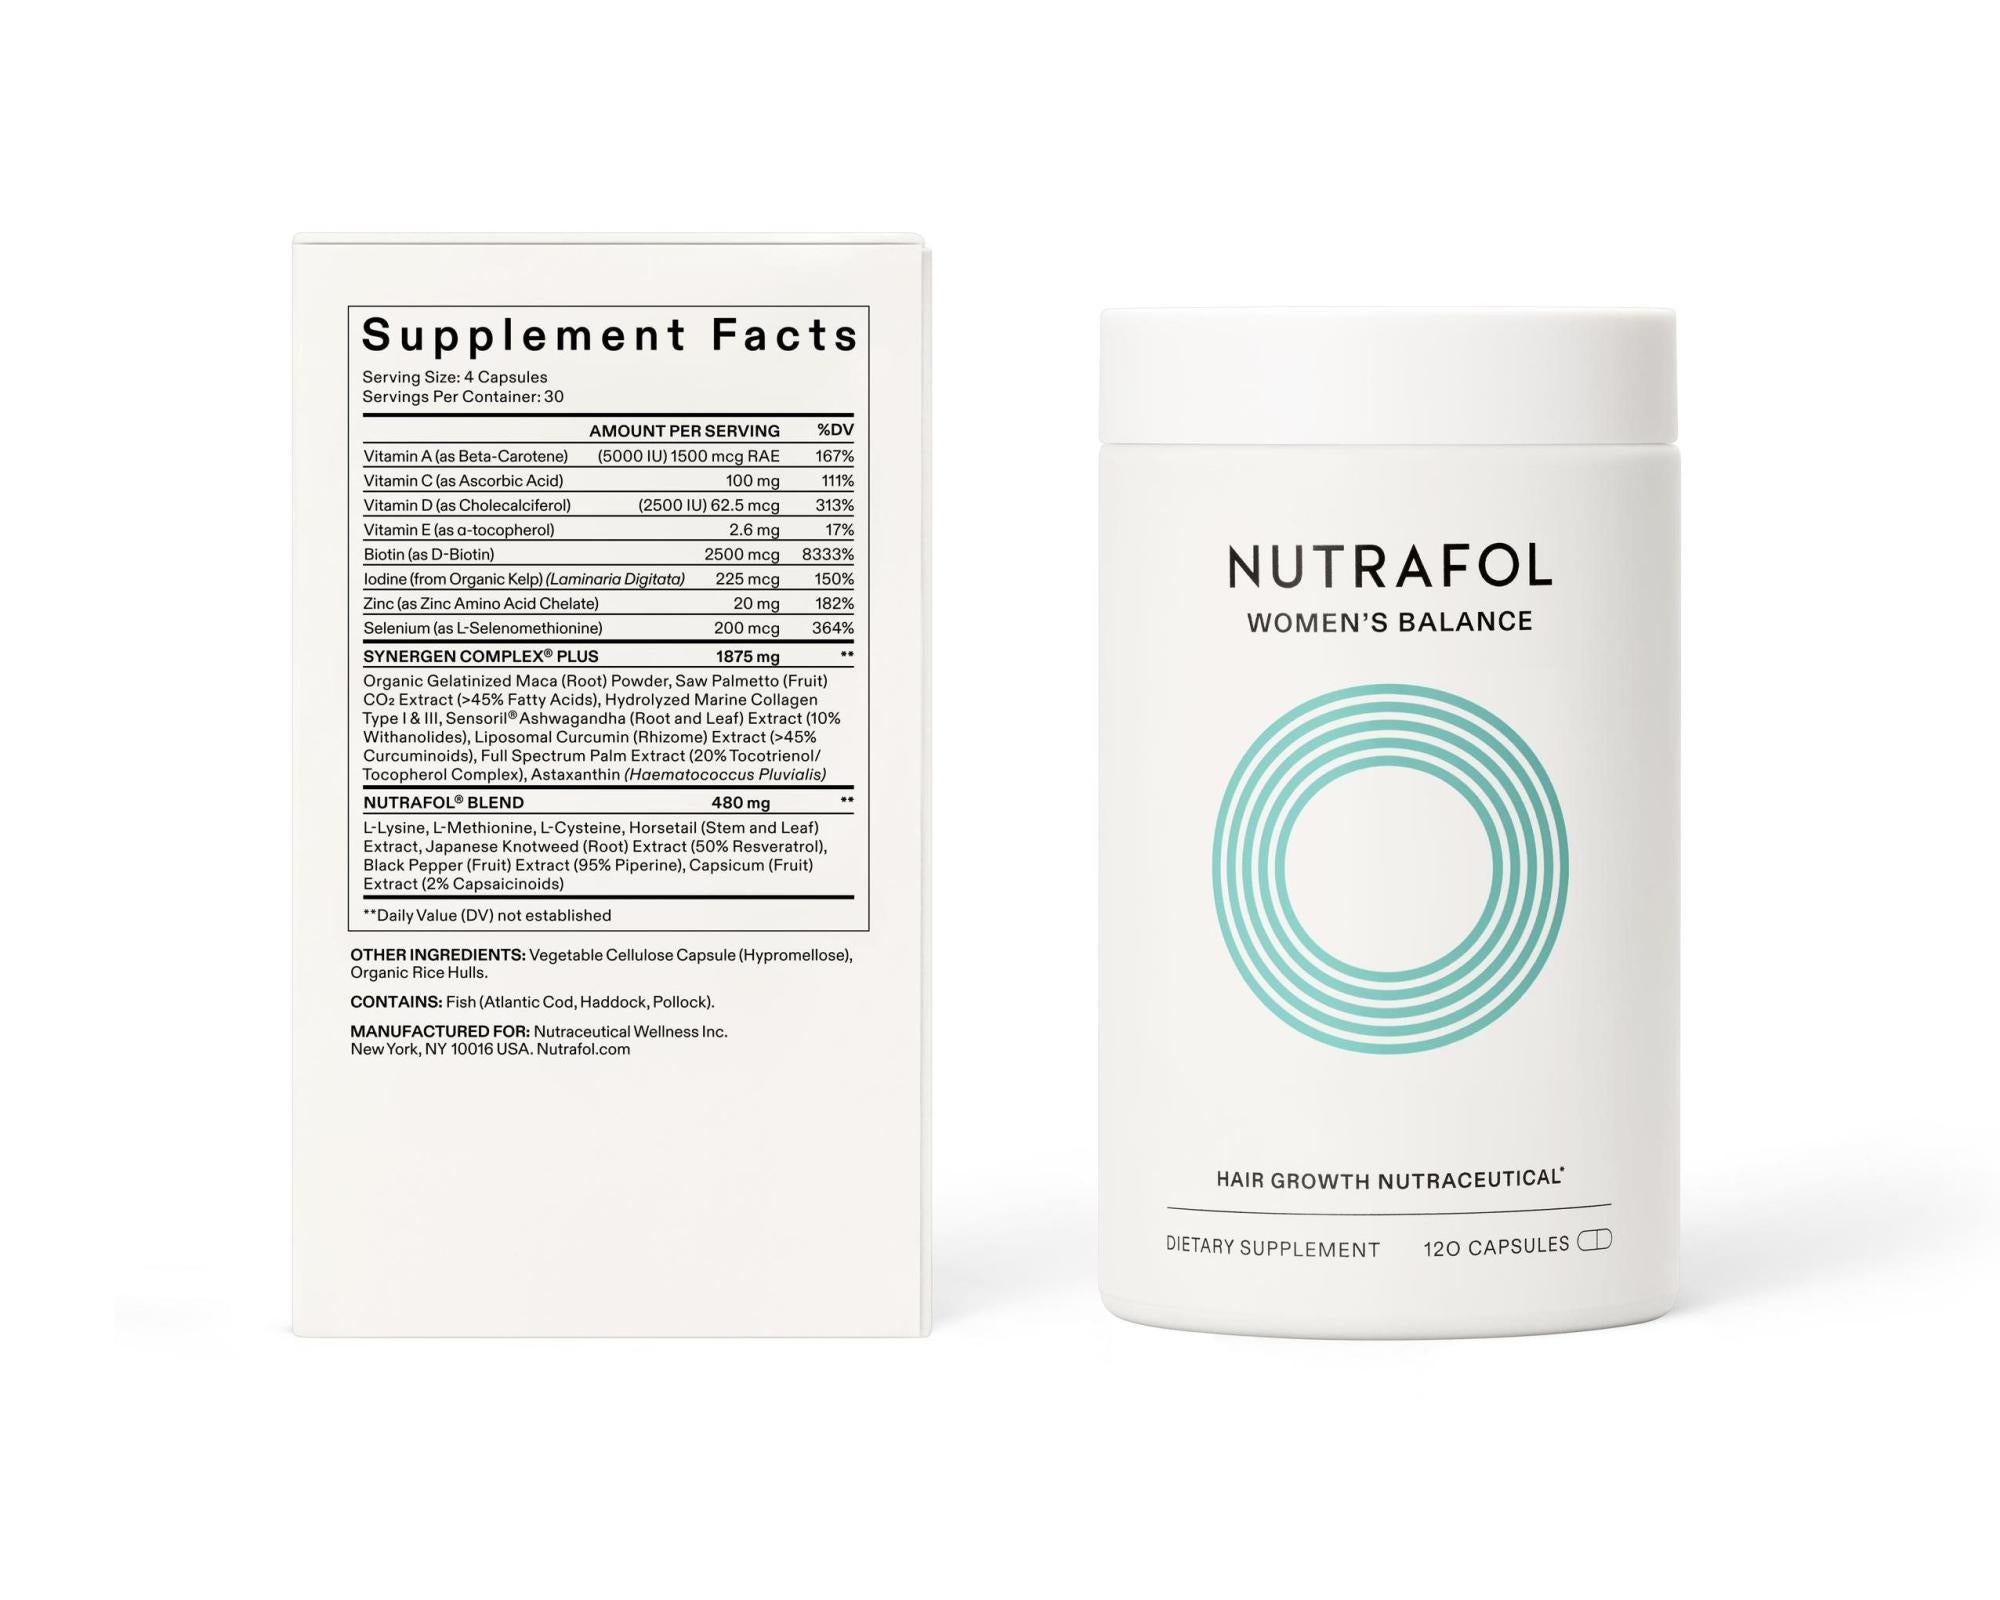 Nutrafol Women’s Balance Hair Growth Nutraceutical (120 Capsules)